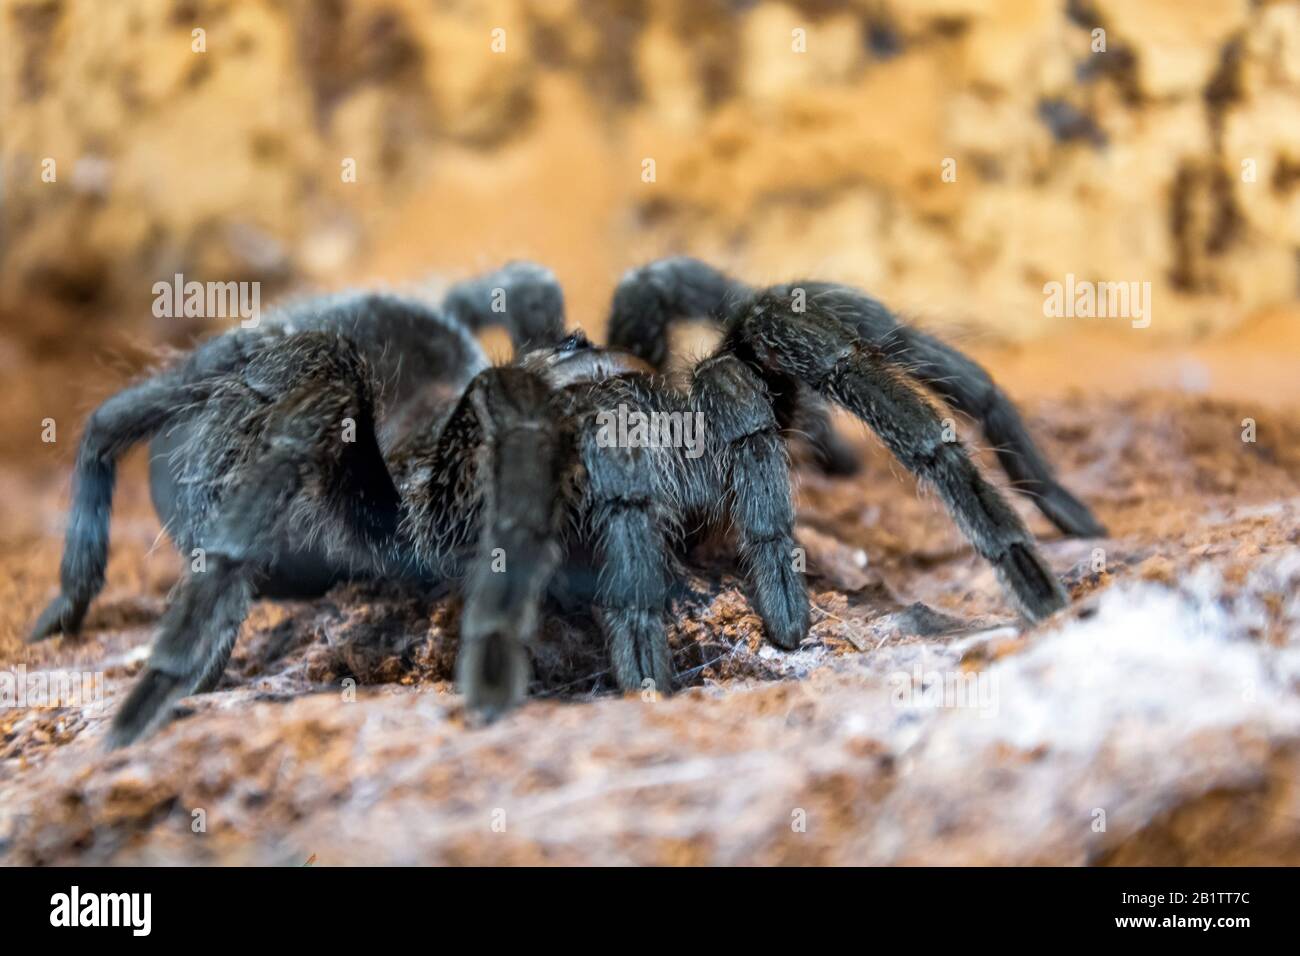 The black tarantula Grammostola pulchra spider sits on the ground Stock Photo